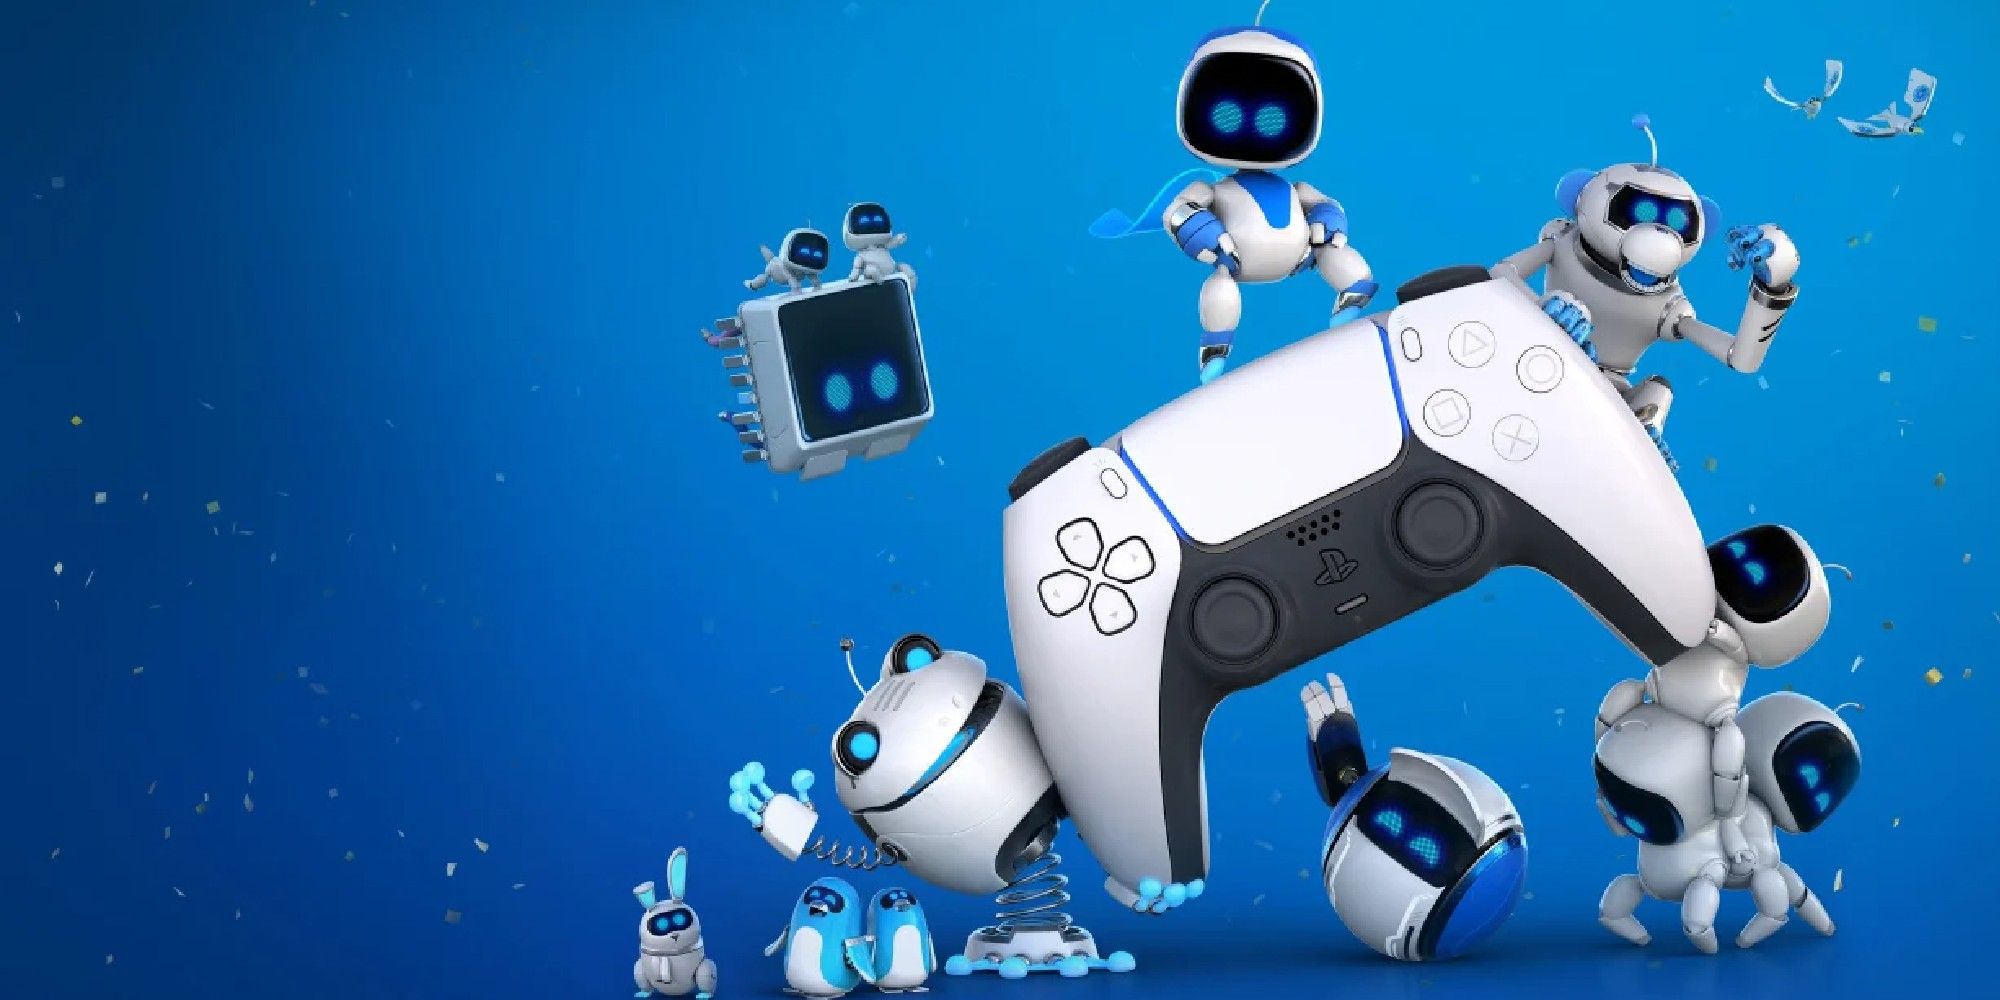 Astro bots surrounding a DualSense controller against a blue background.